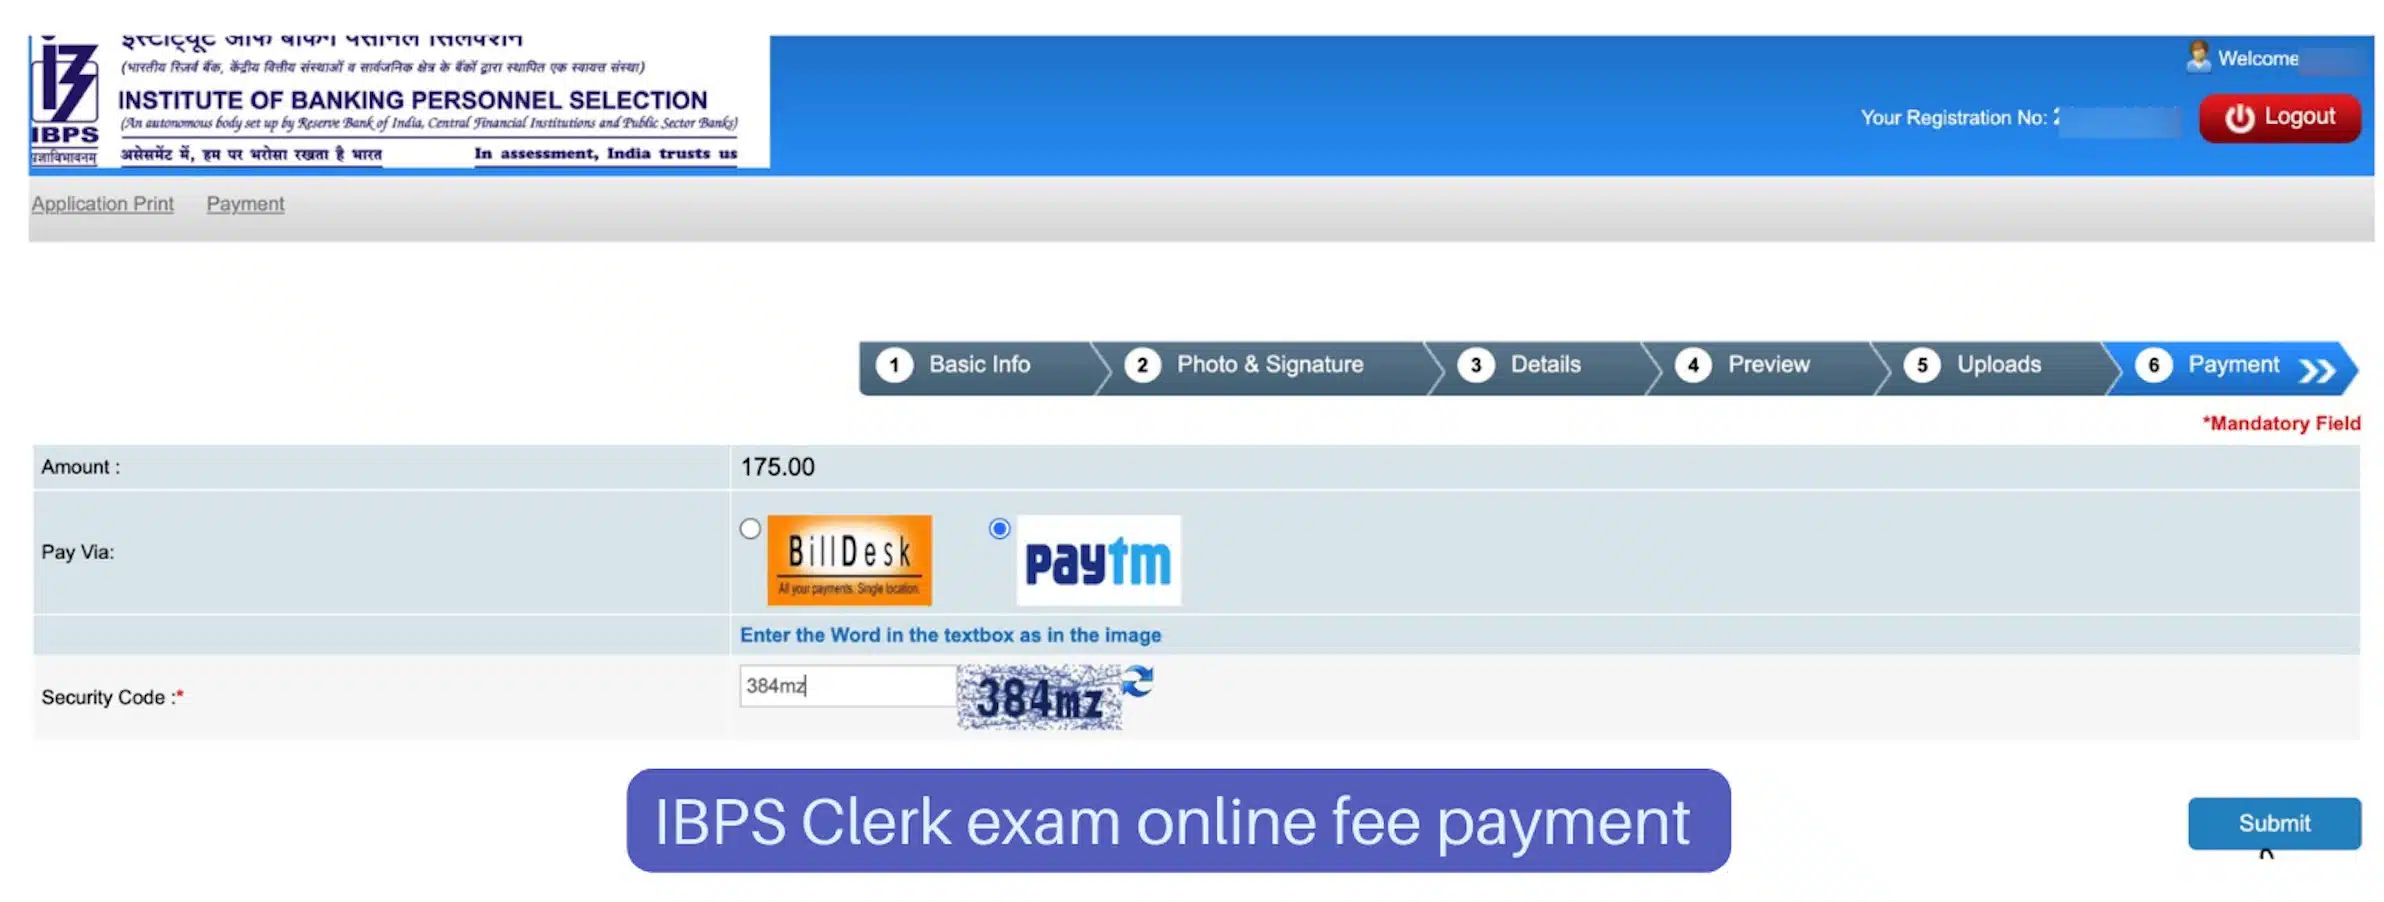 IBPS Clerk Exam online fee payment